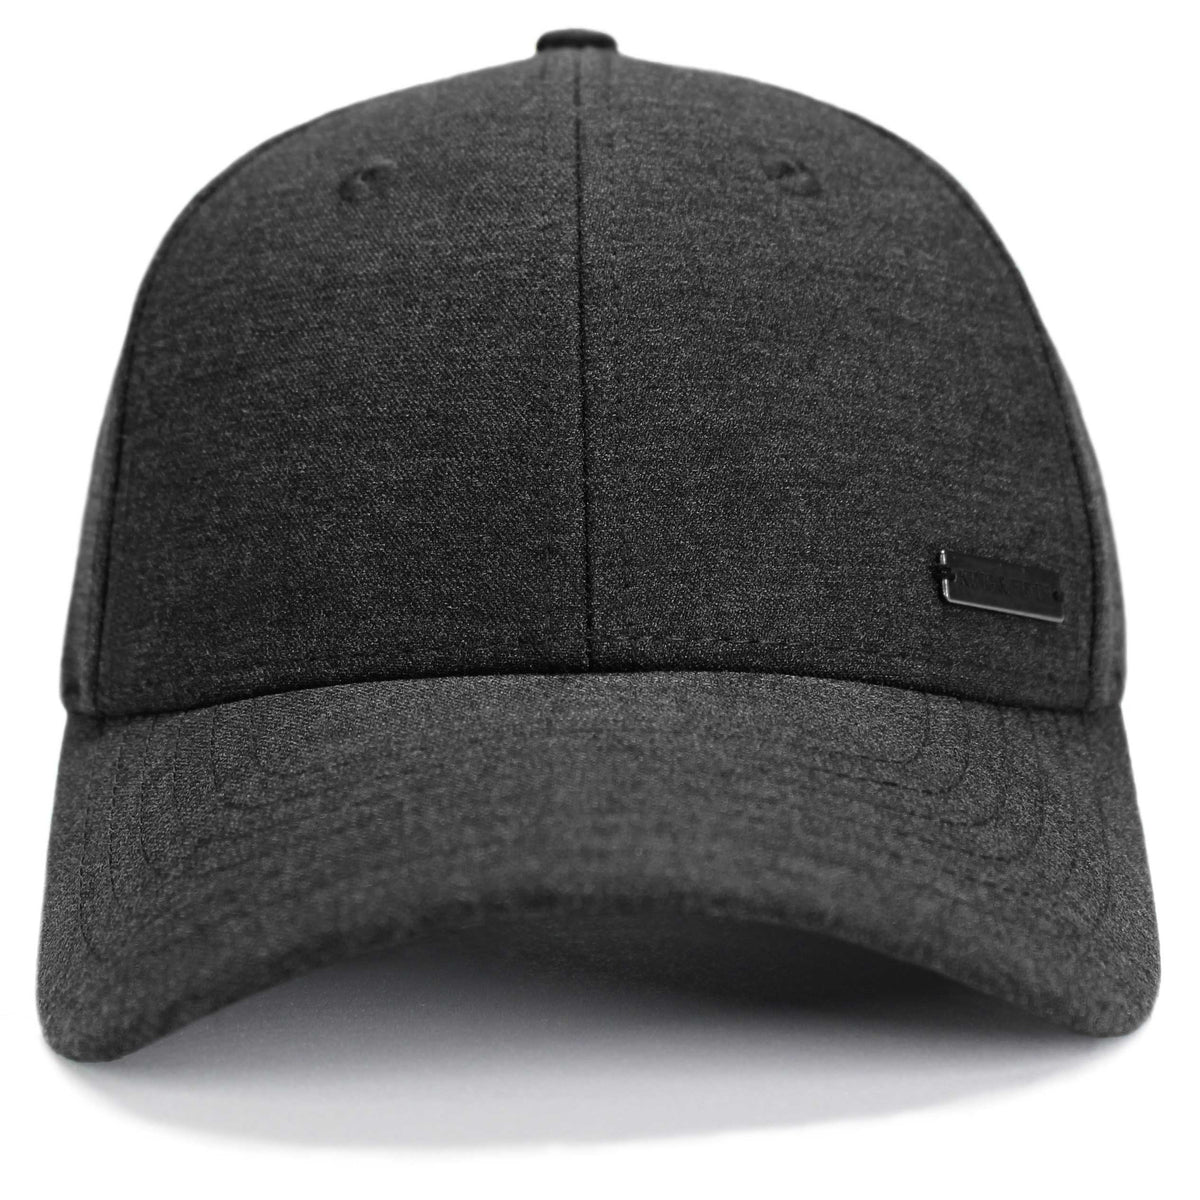 Avalon Leather Baseball Cap Black - Women's Hats